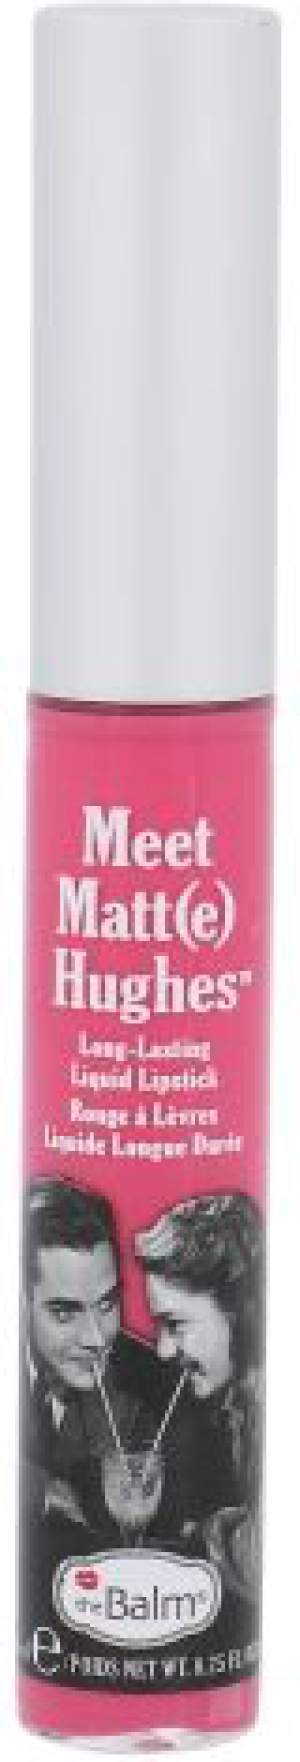 The Balm Meet Matt(e) Hughes Long-Lasting Liquid Lipstick Pomadka Chivalrous 7.4ml 1